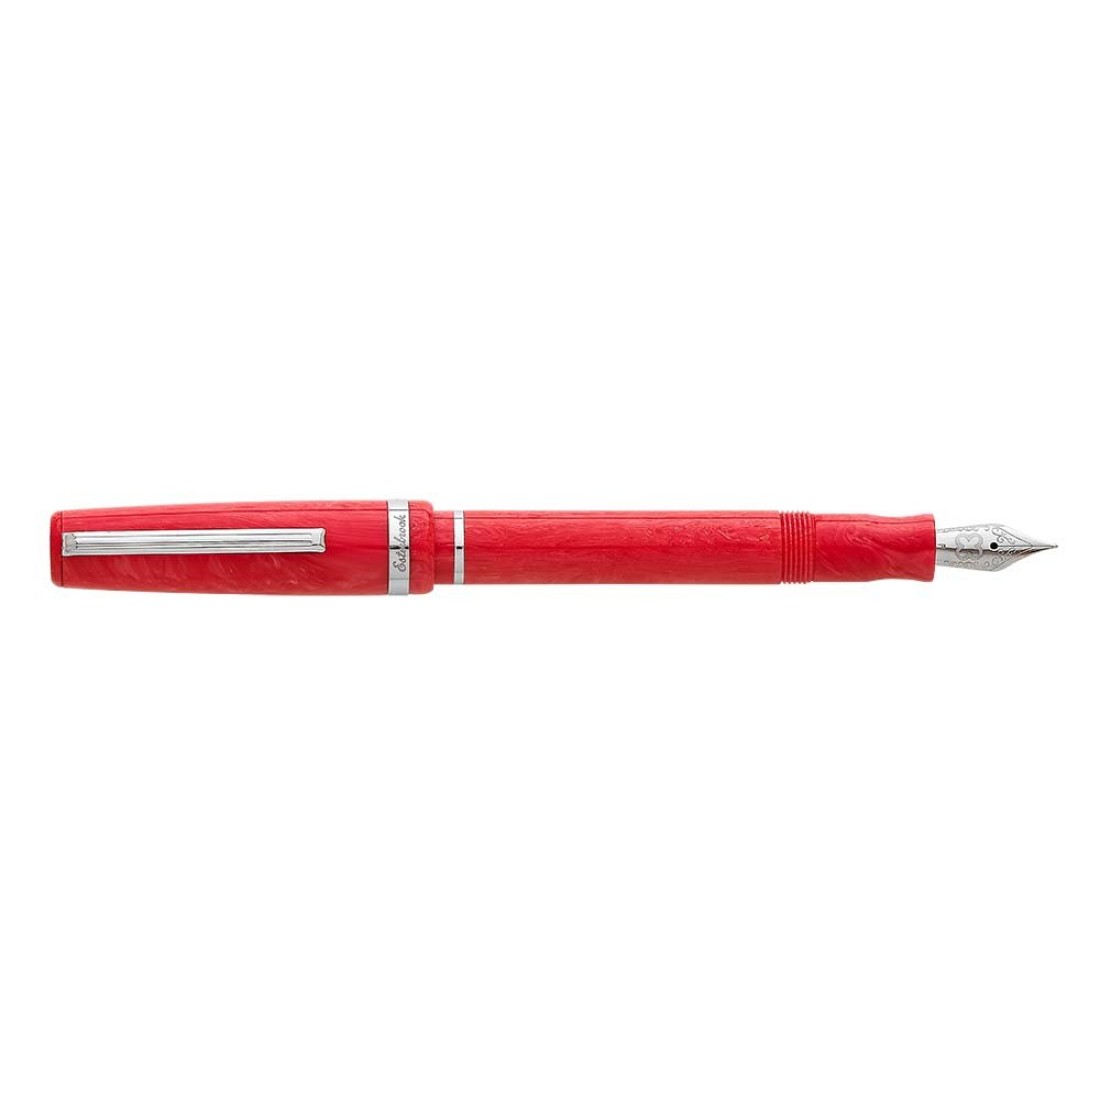 Esterbrook JR Pocket Carmine Red Fountain pen